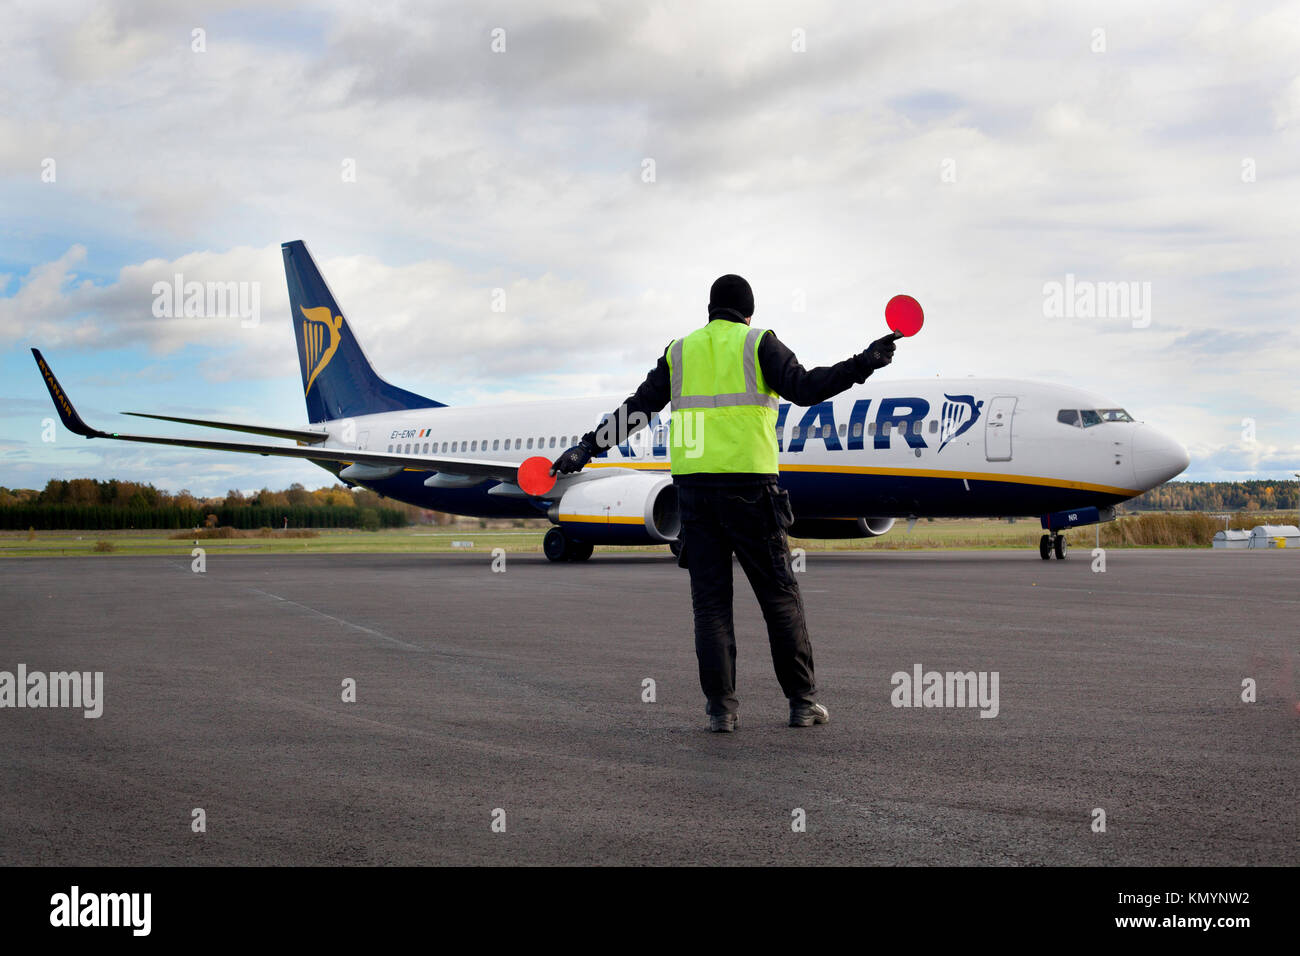 Ryanair arrives at airport Stock Photo